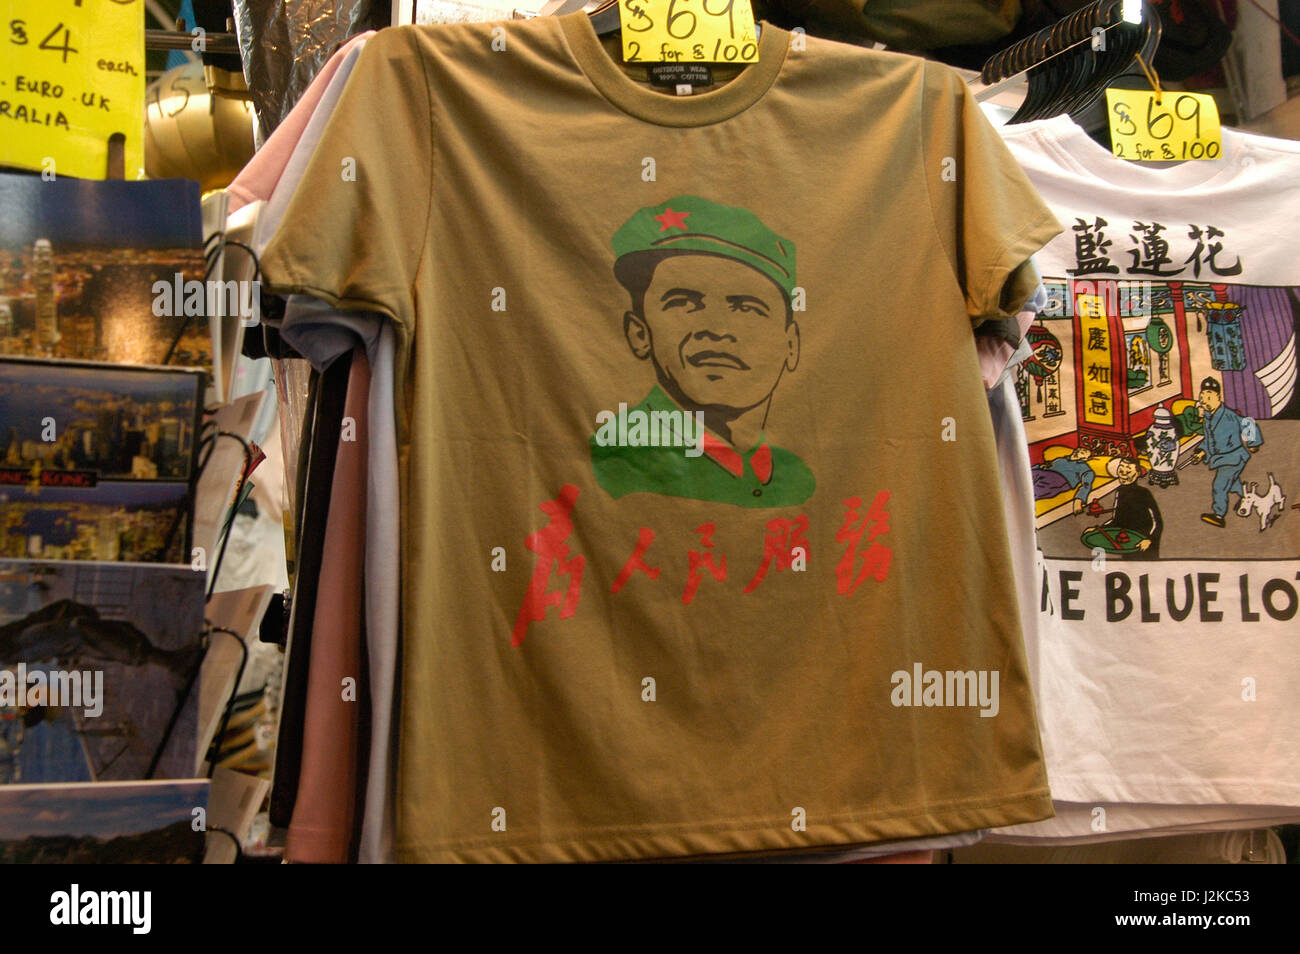 Camiseta barack obama fotografías e imágenes de alta resolución - Alamy